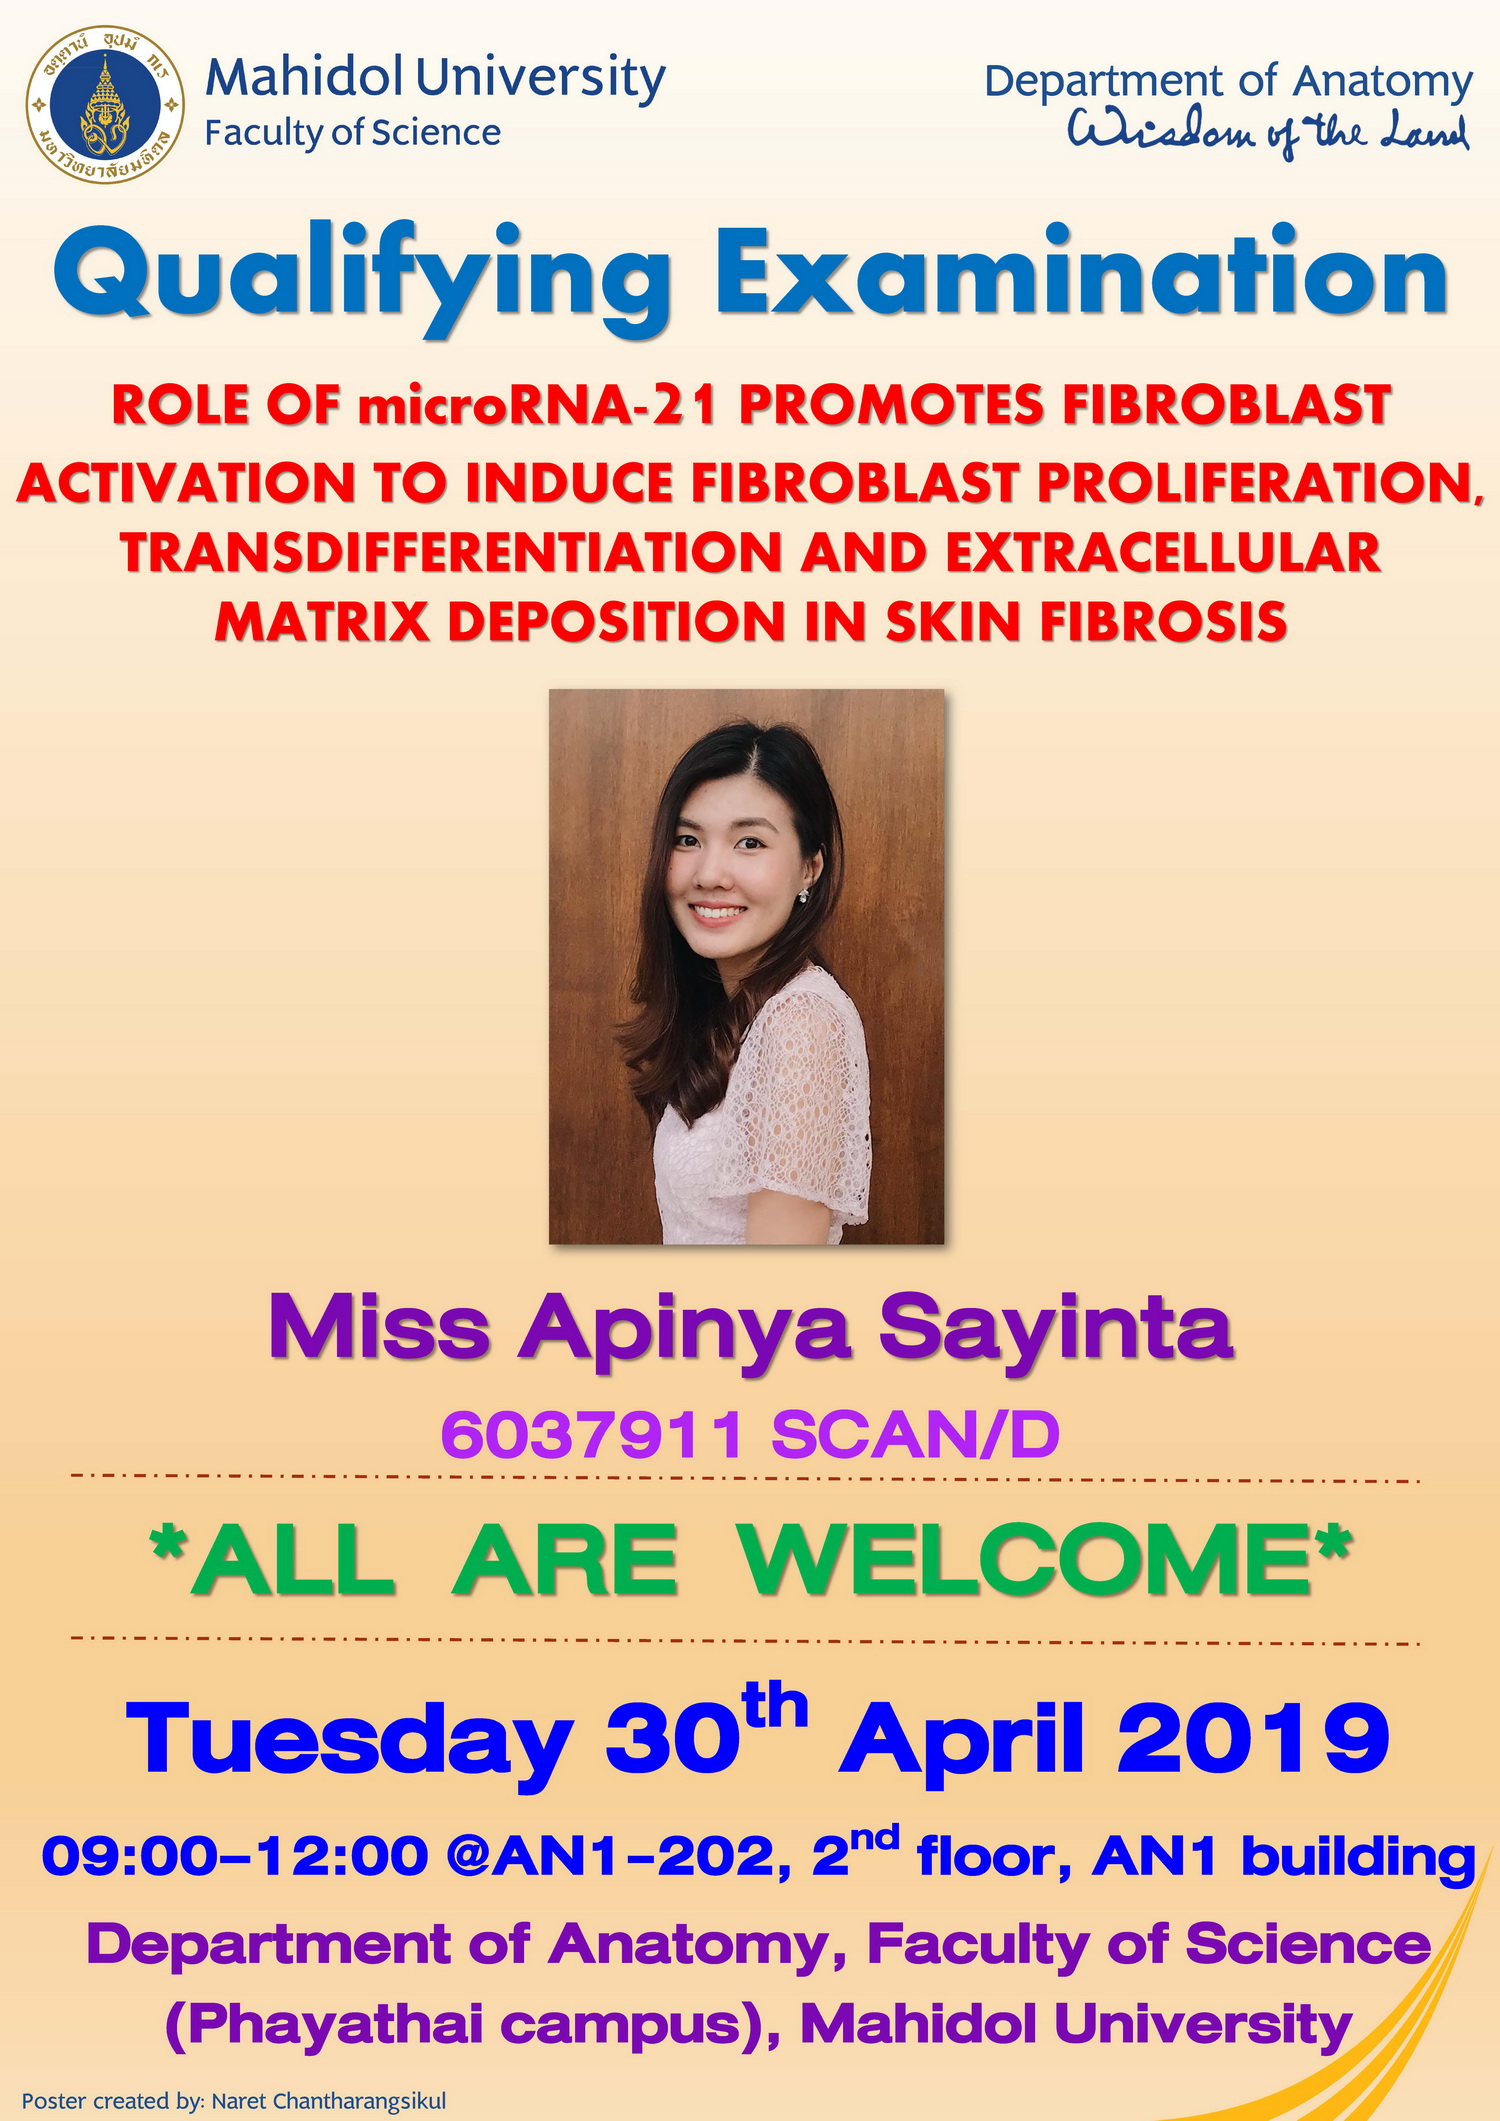 Apinya's Qualifying Examination (QE) on Tuesday 30th April 2019, 09:00-12:00, @AN1-202